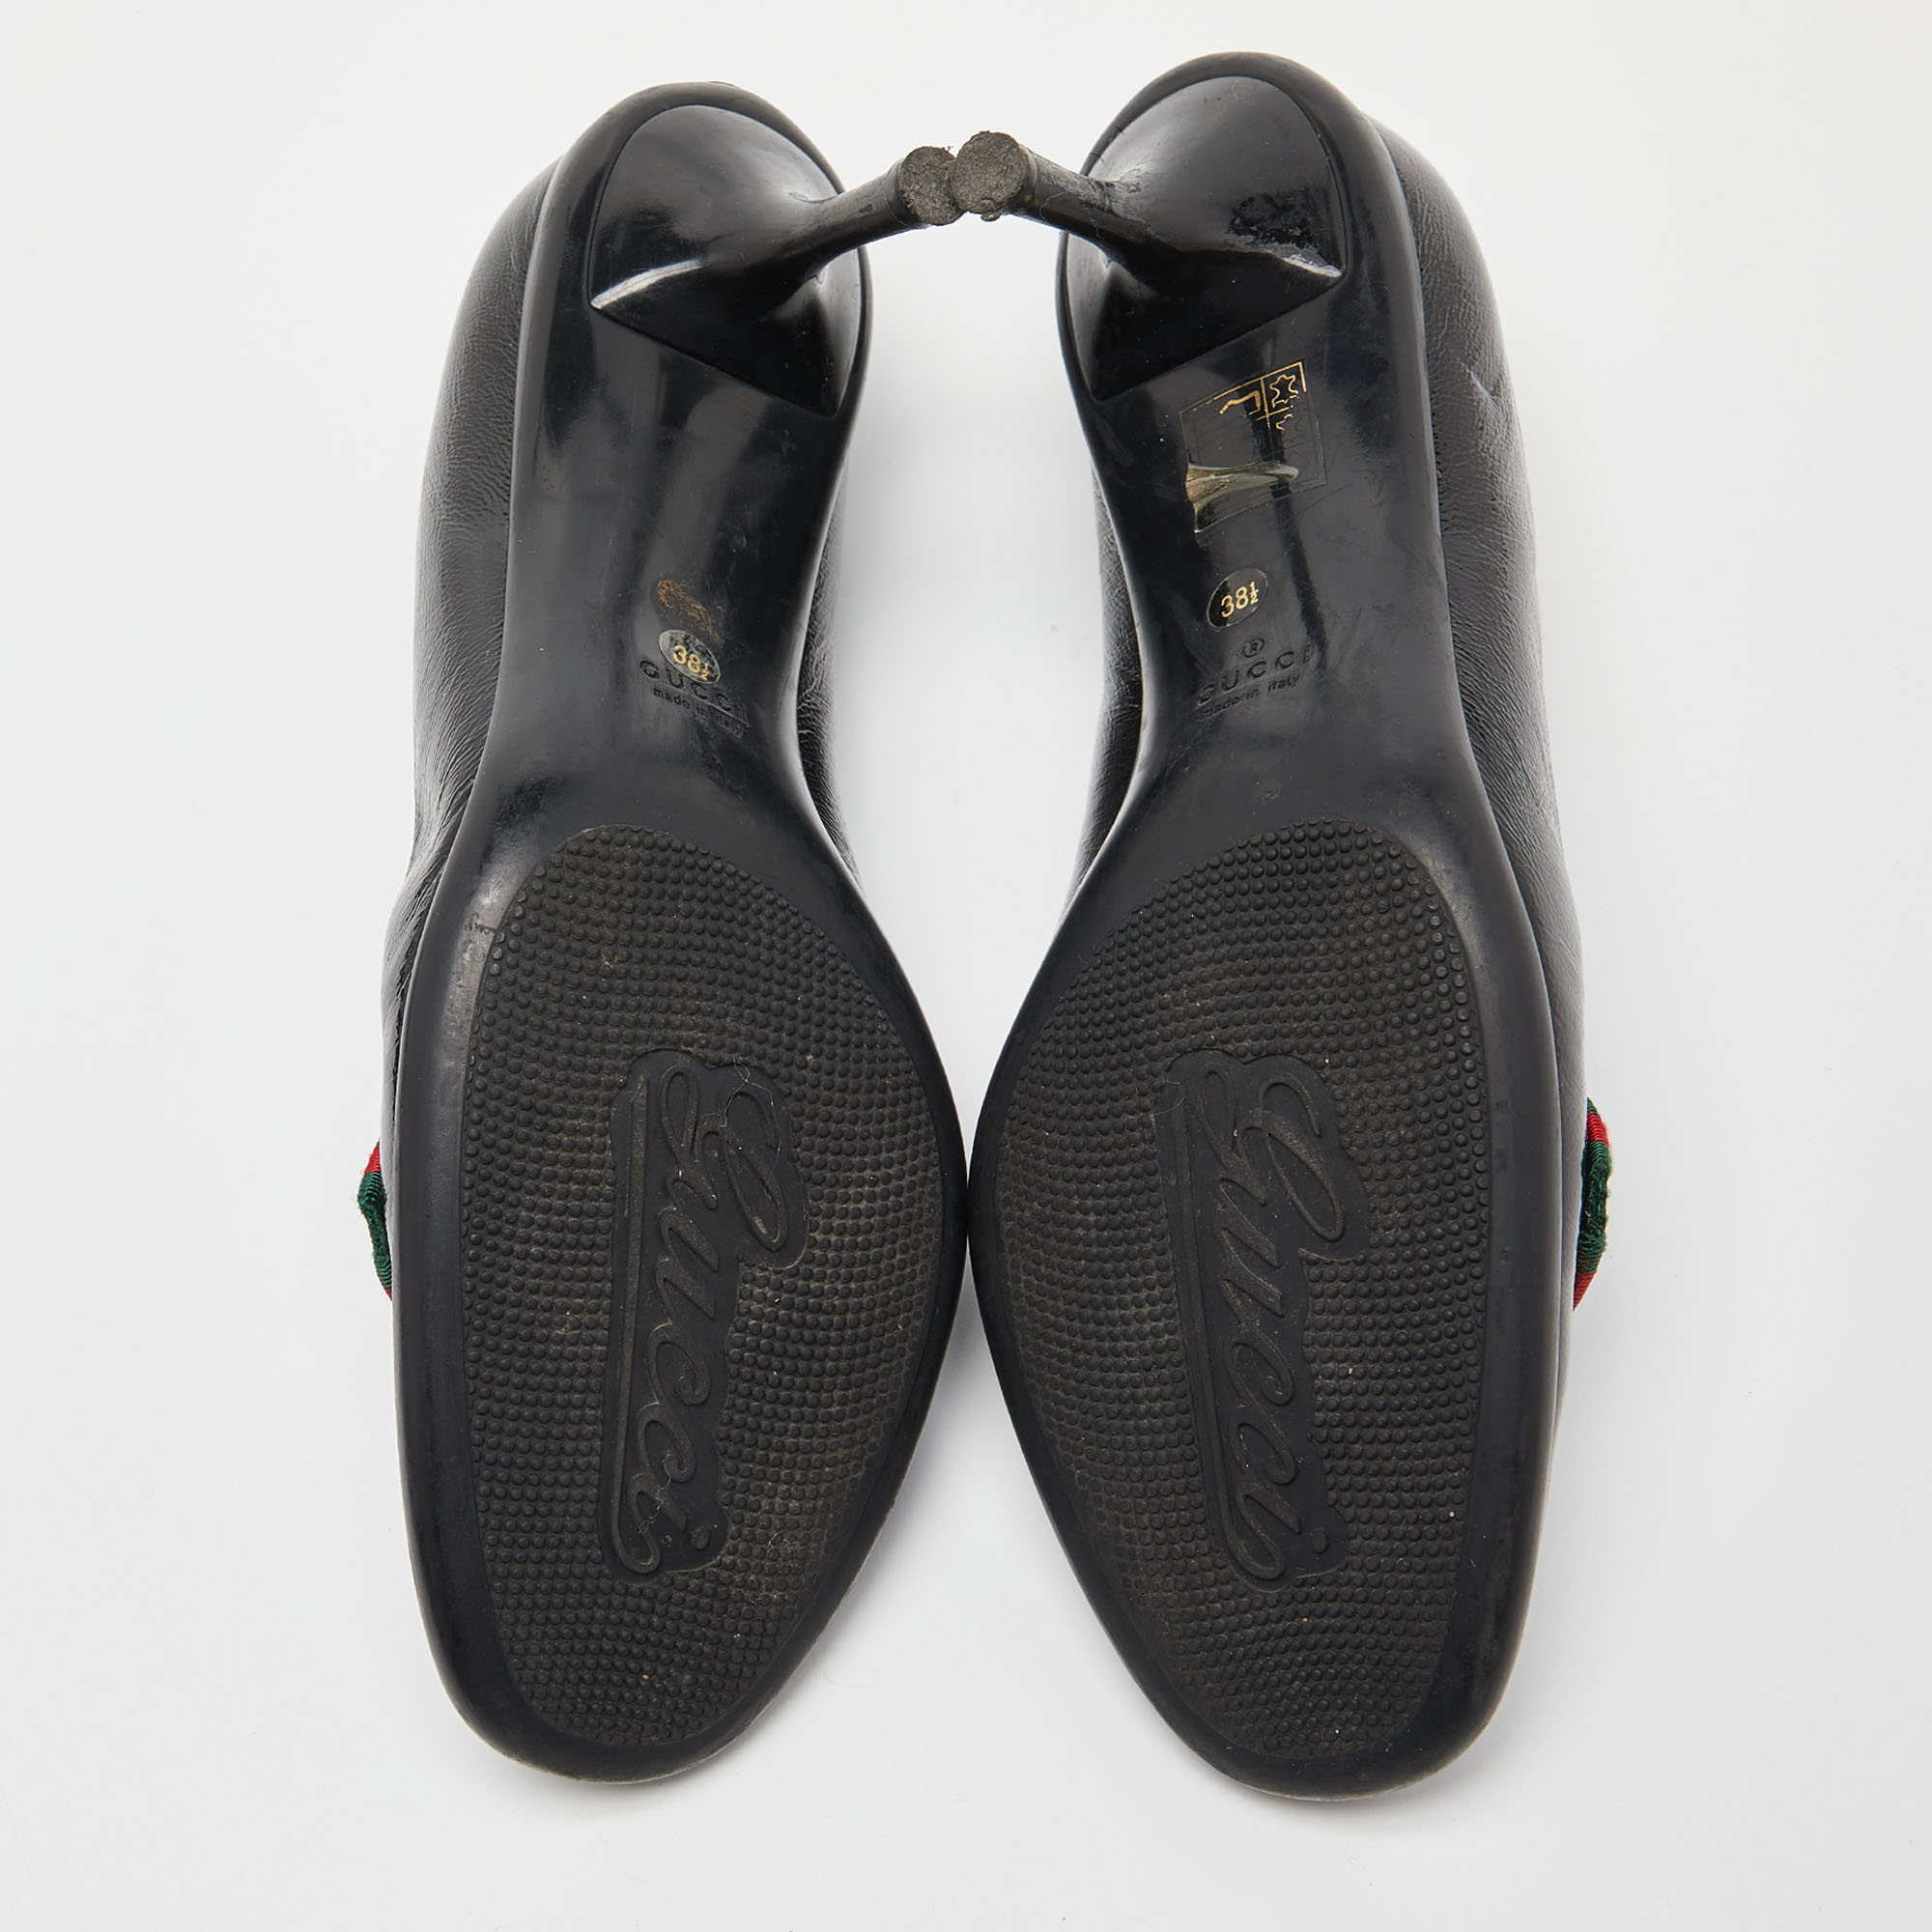 Gucci Black Patent Leather Web Bow Pumps Size 38.5